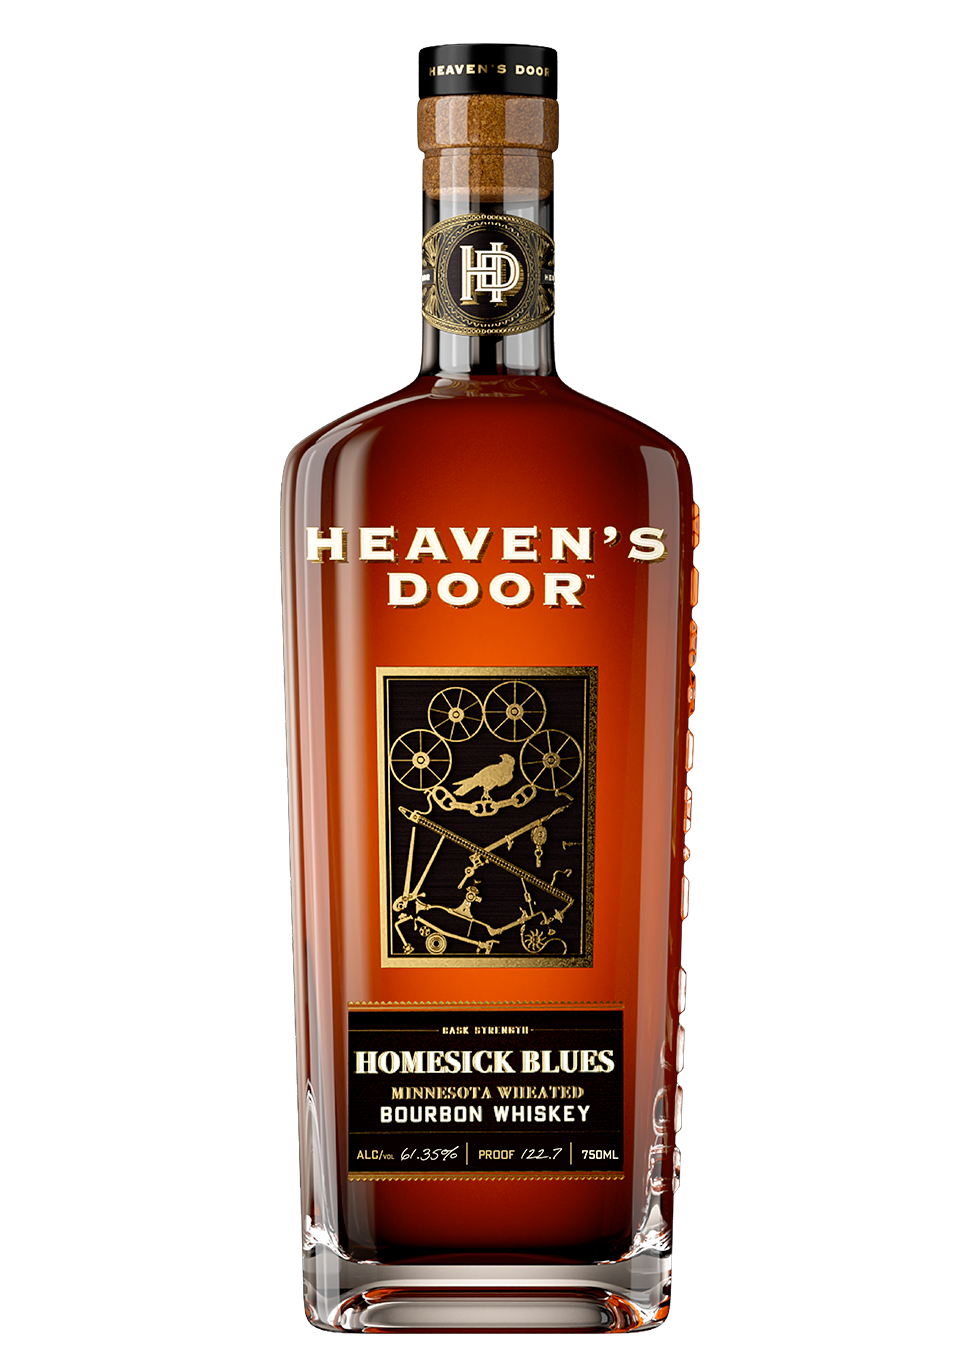 Homesick Blues Minnesota Wheated Bourbon Whiskey – Heaven's Door